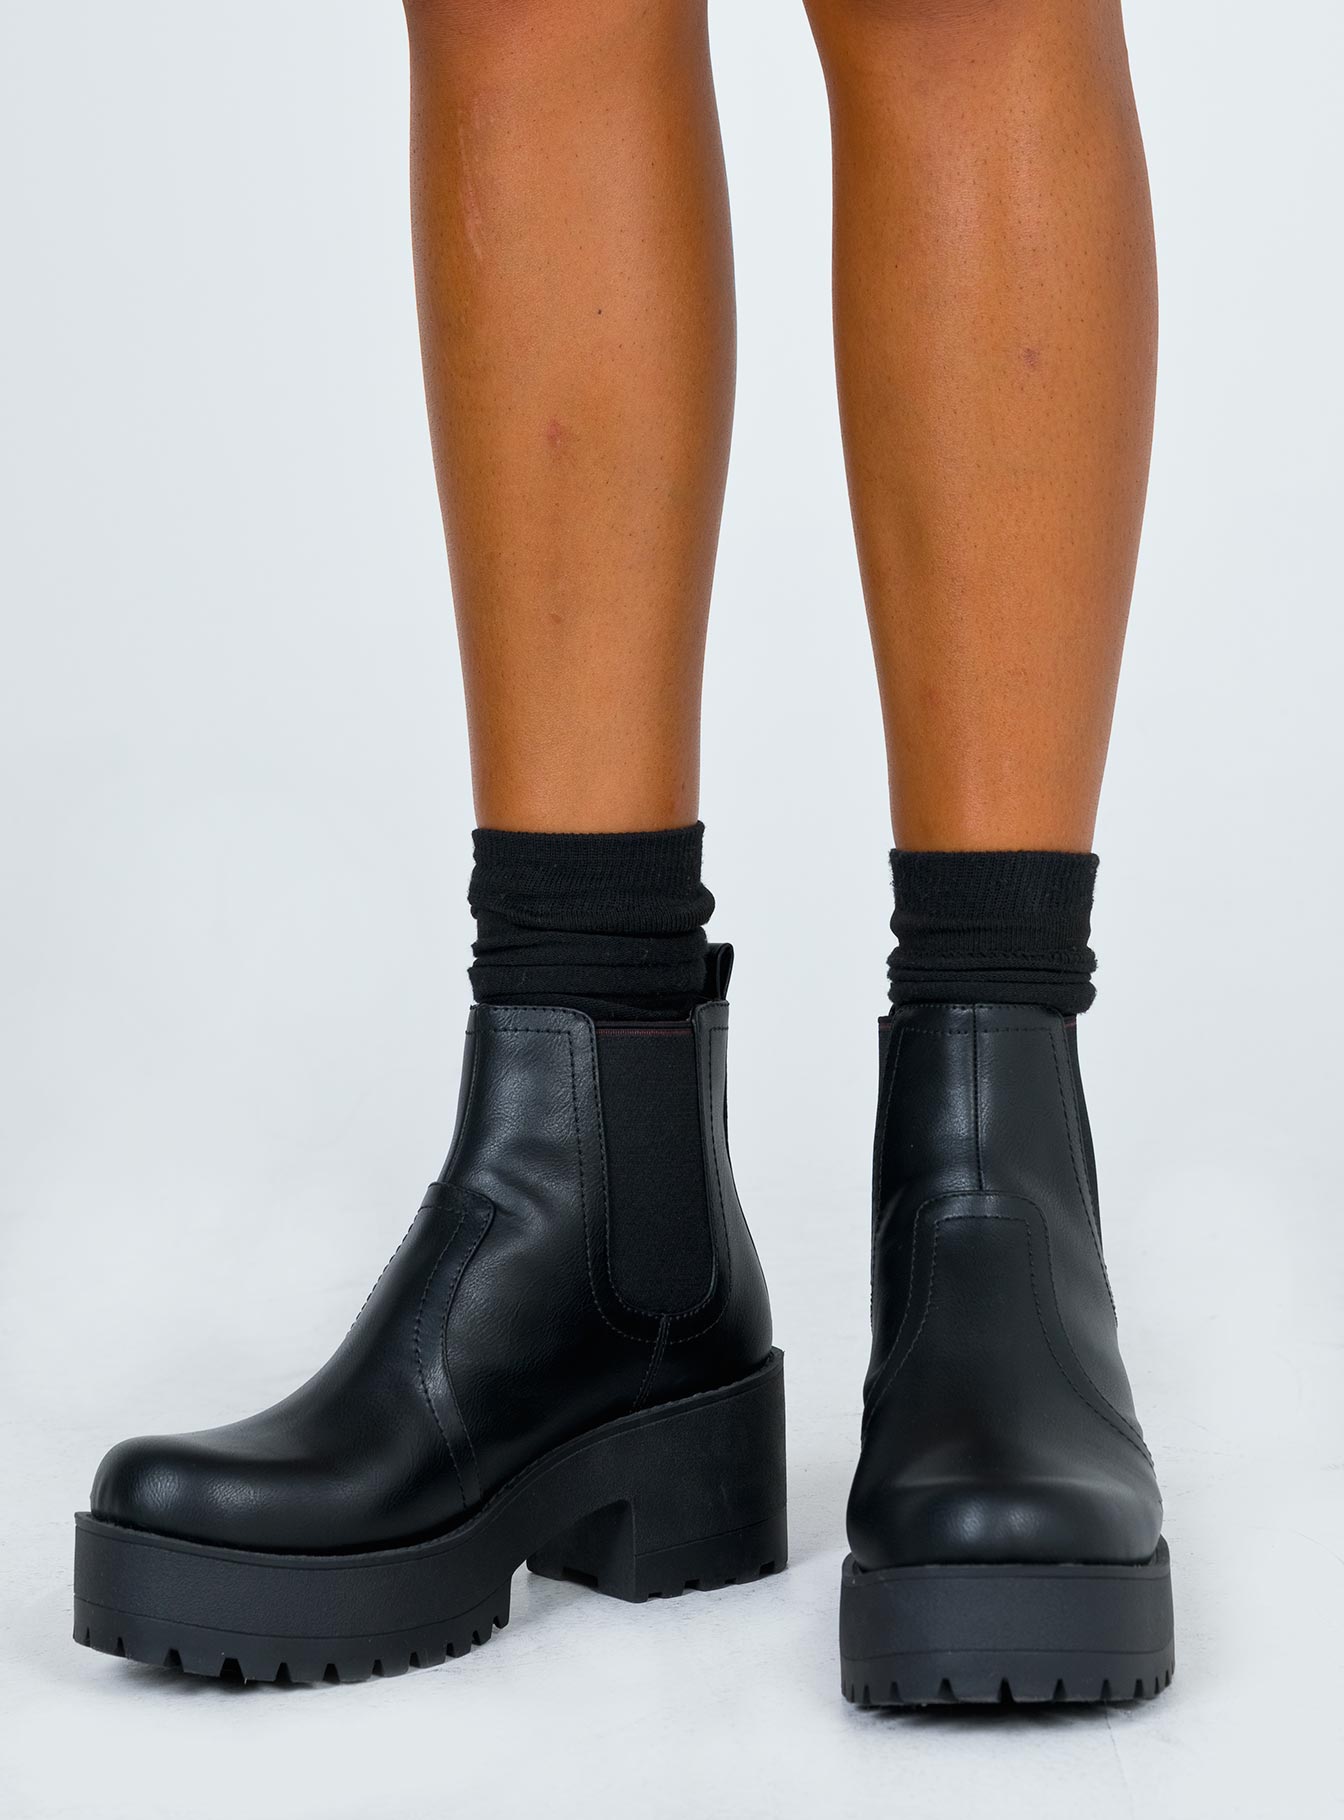 chelsea boots womens australia